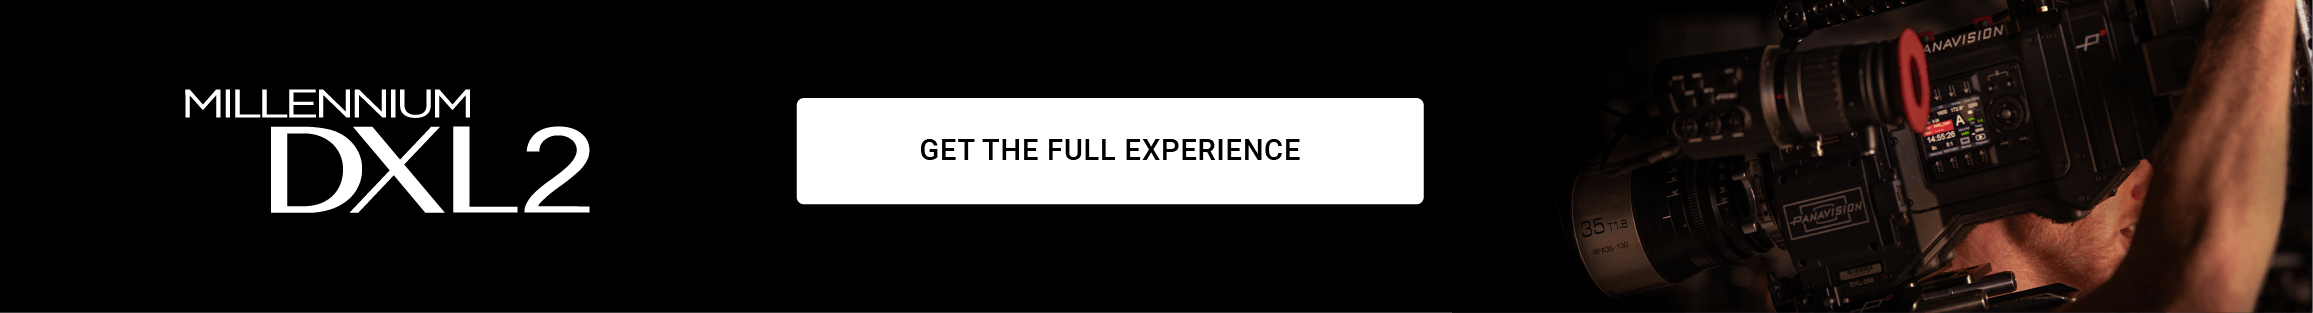 Millennium DXL2 - Get the full experience